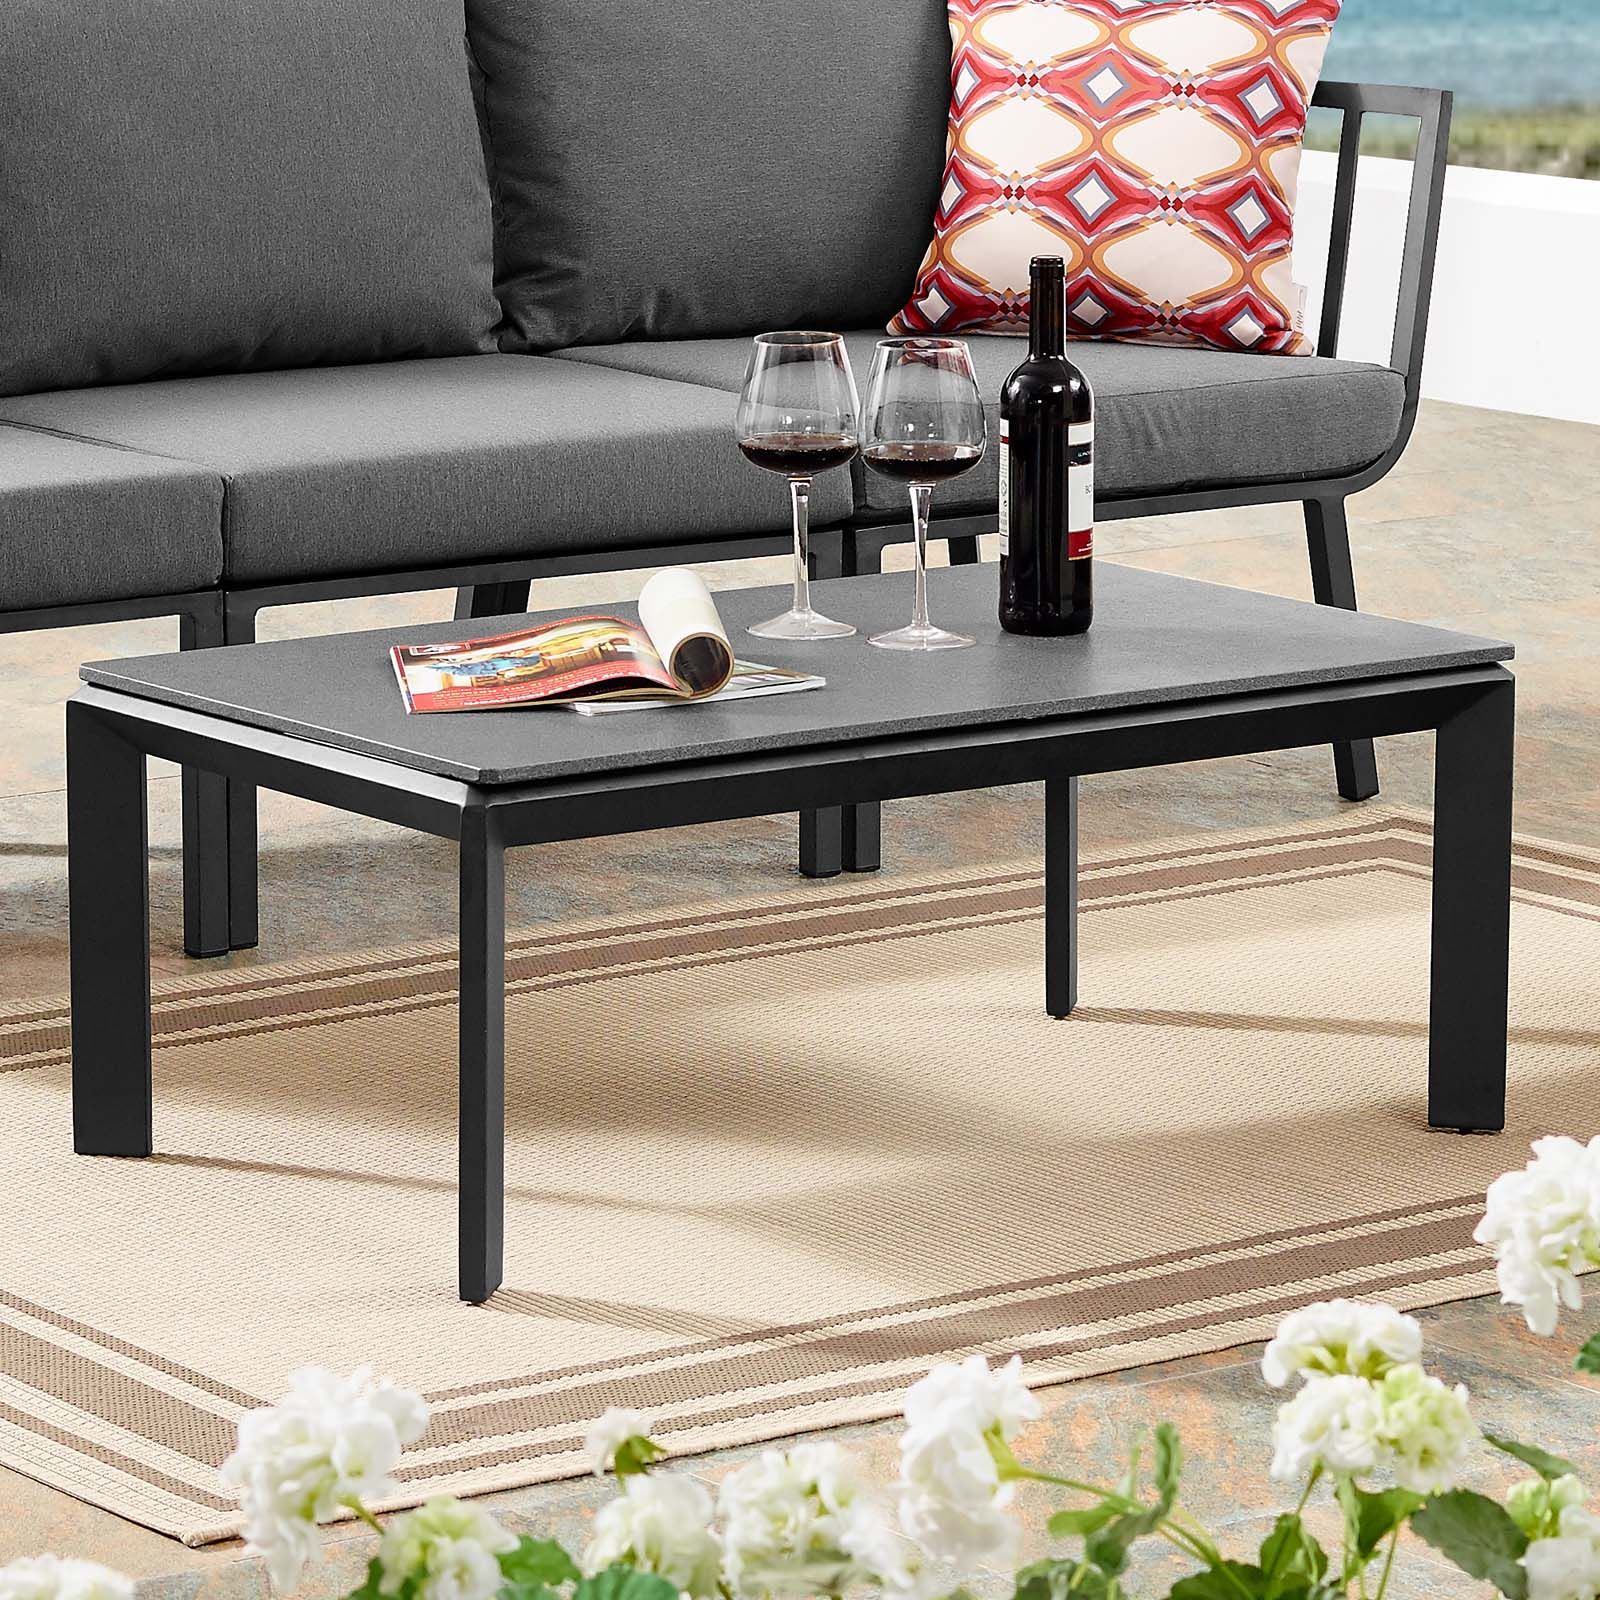 Riverside Aluminum Outdoor Patio Coffee Table Gray With Outdoor Coffee Tables With Storage (View 4 of 20)